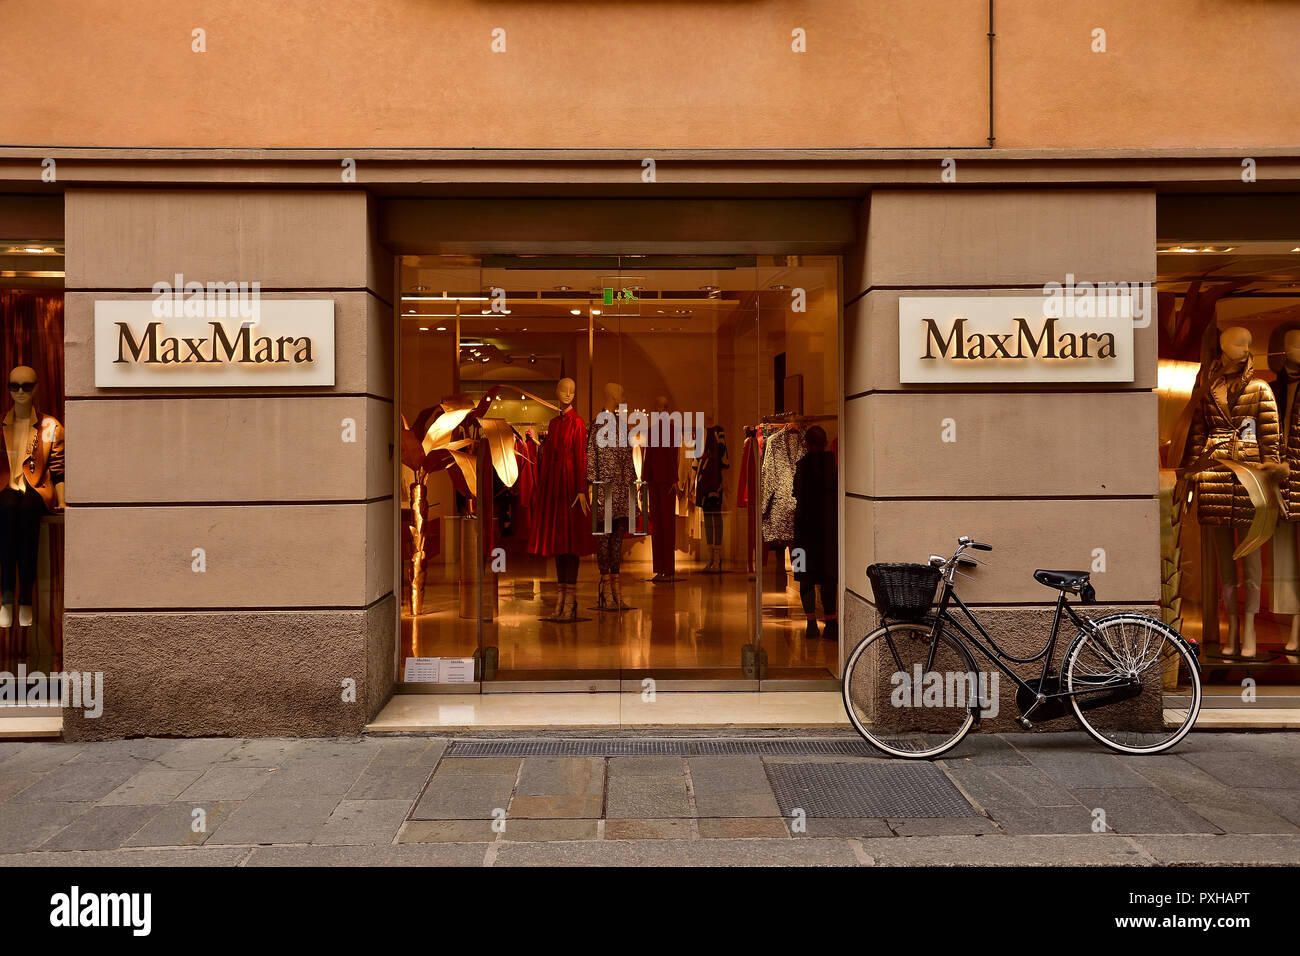 Max Mara in Reggio Emilia, Italien Stockfoto